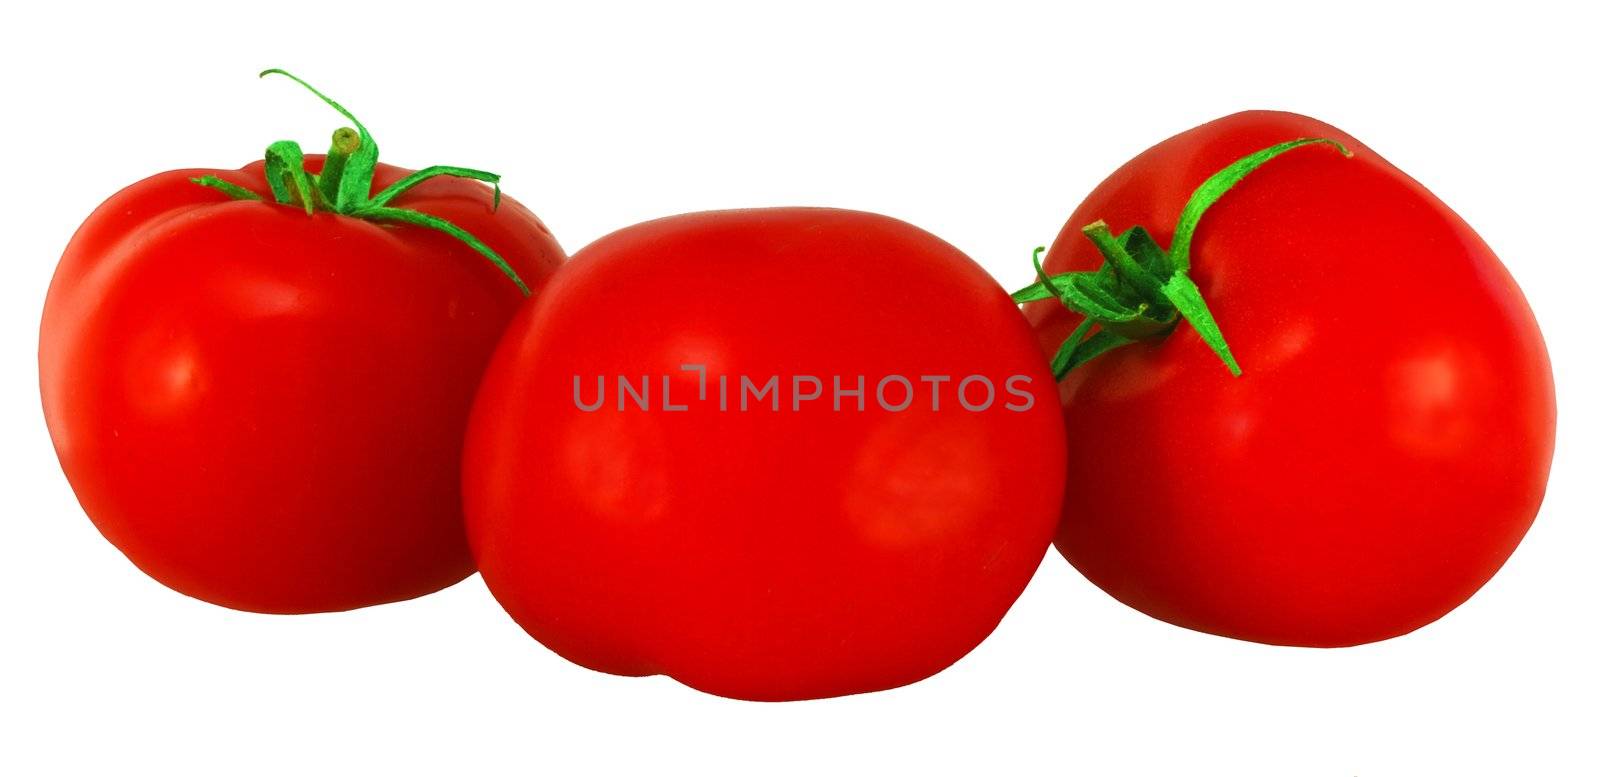 fresh tuber of tomato on a white background